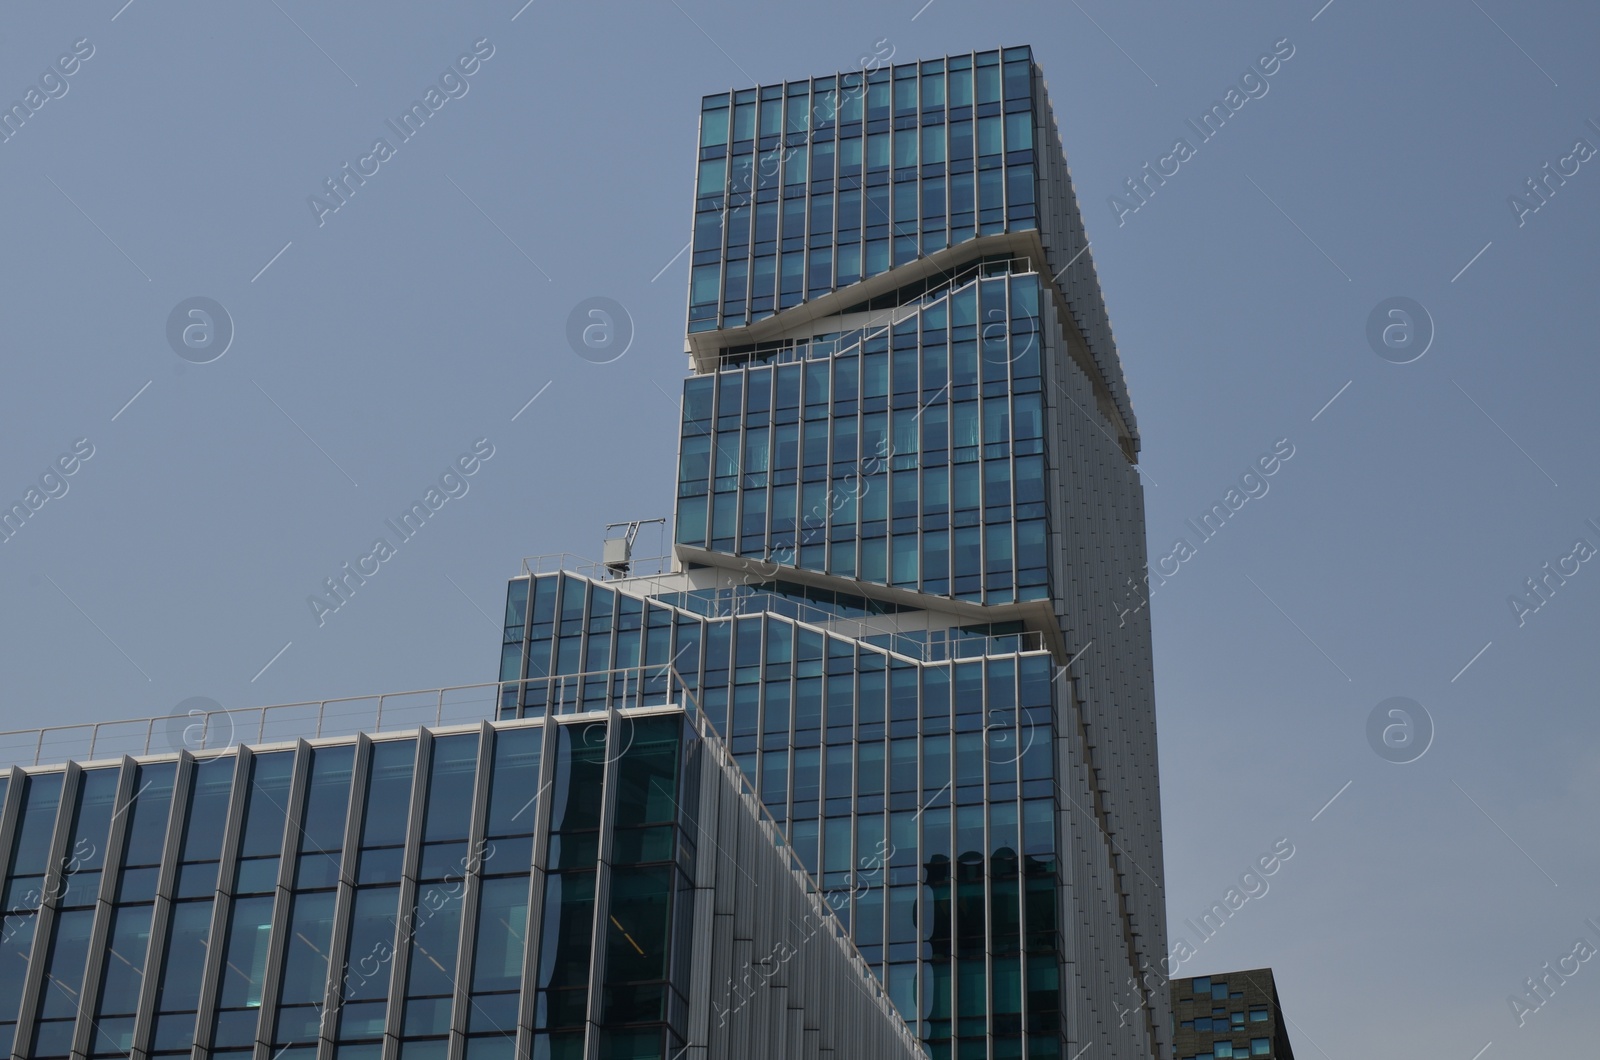 Photo of Exterior of beautiful modern skyscraper against blue sky